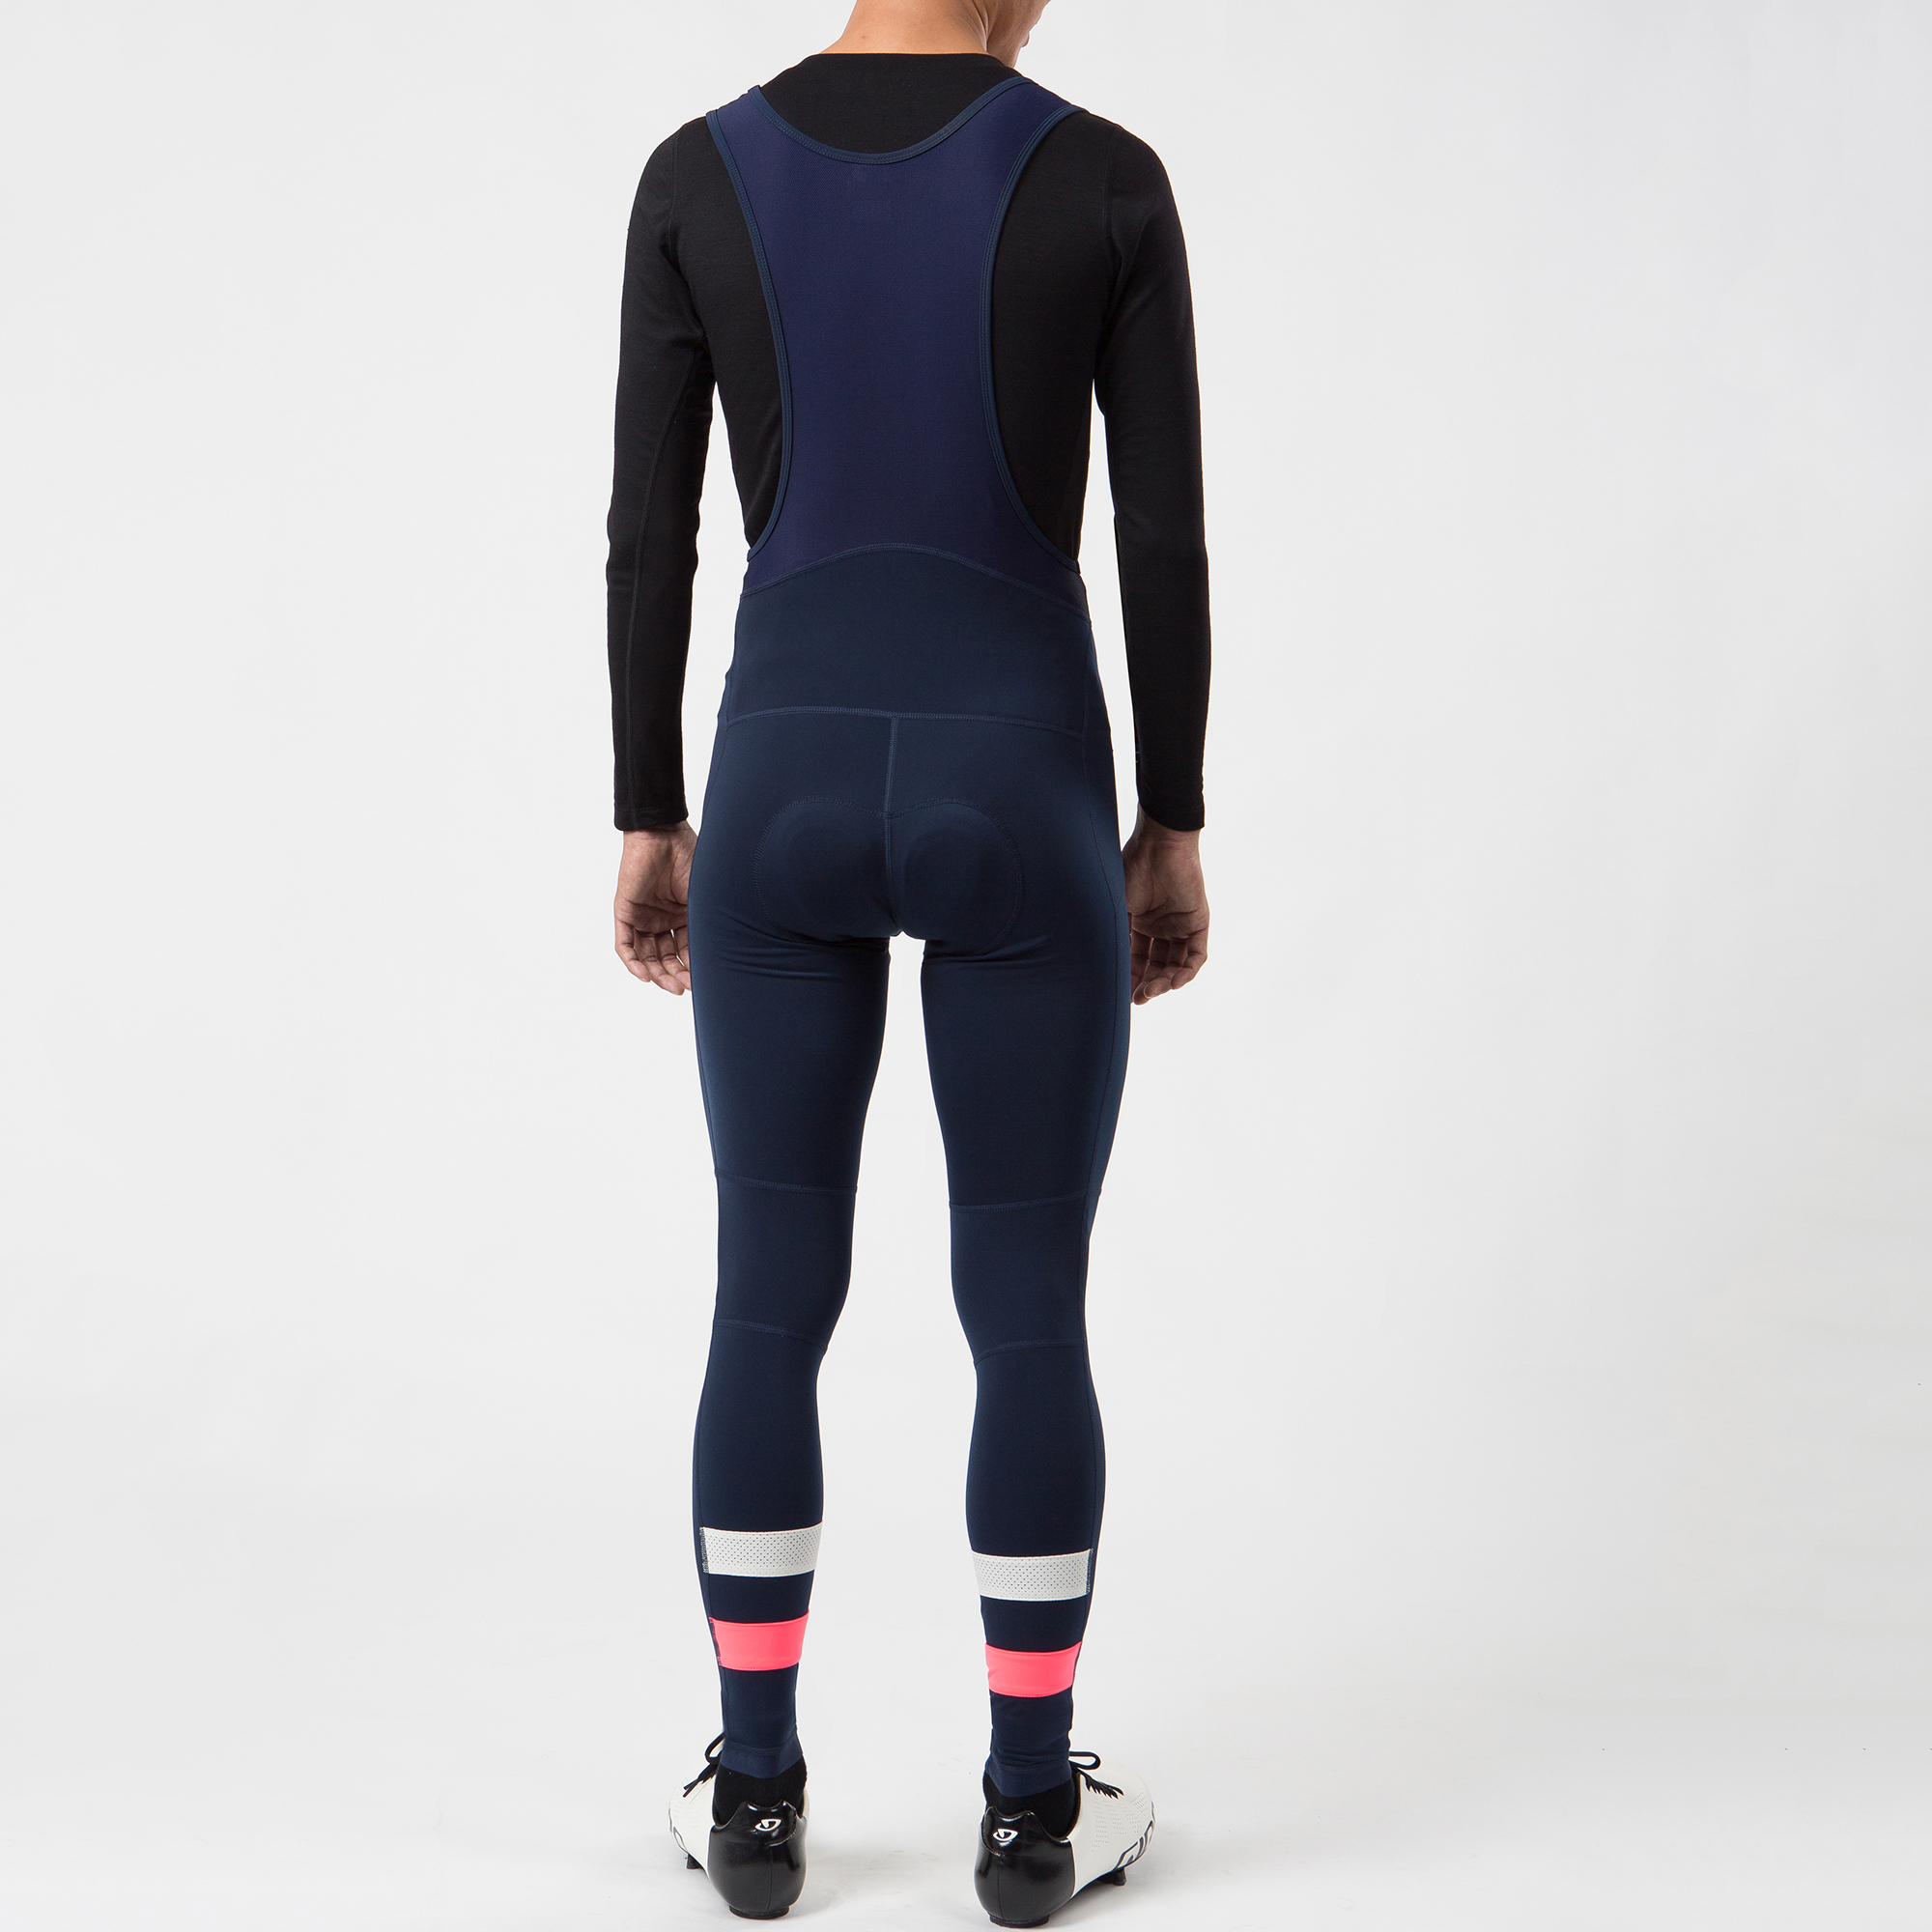 2019 SPEXCEL winter navy thermal fleece training cycling tights cycling bib pants cycling bibs for 8-20 degree ride